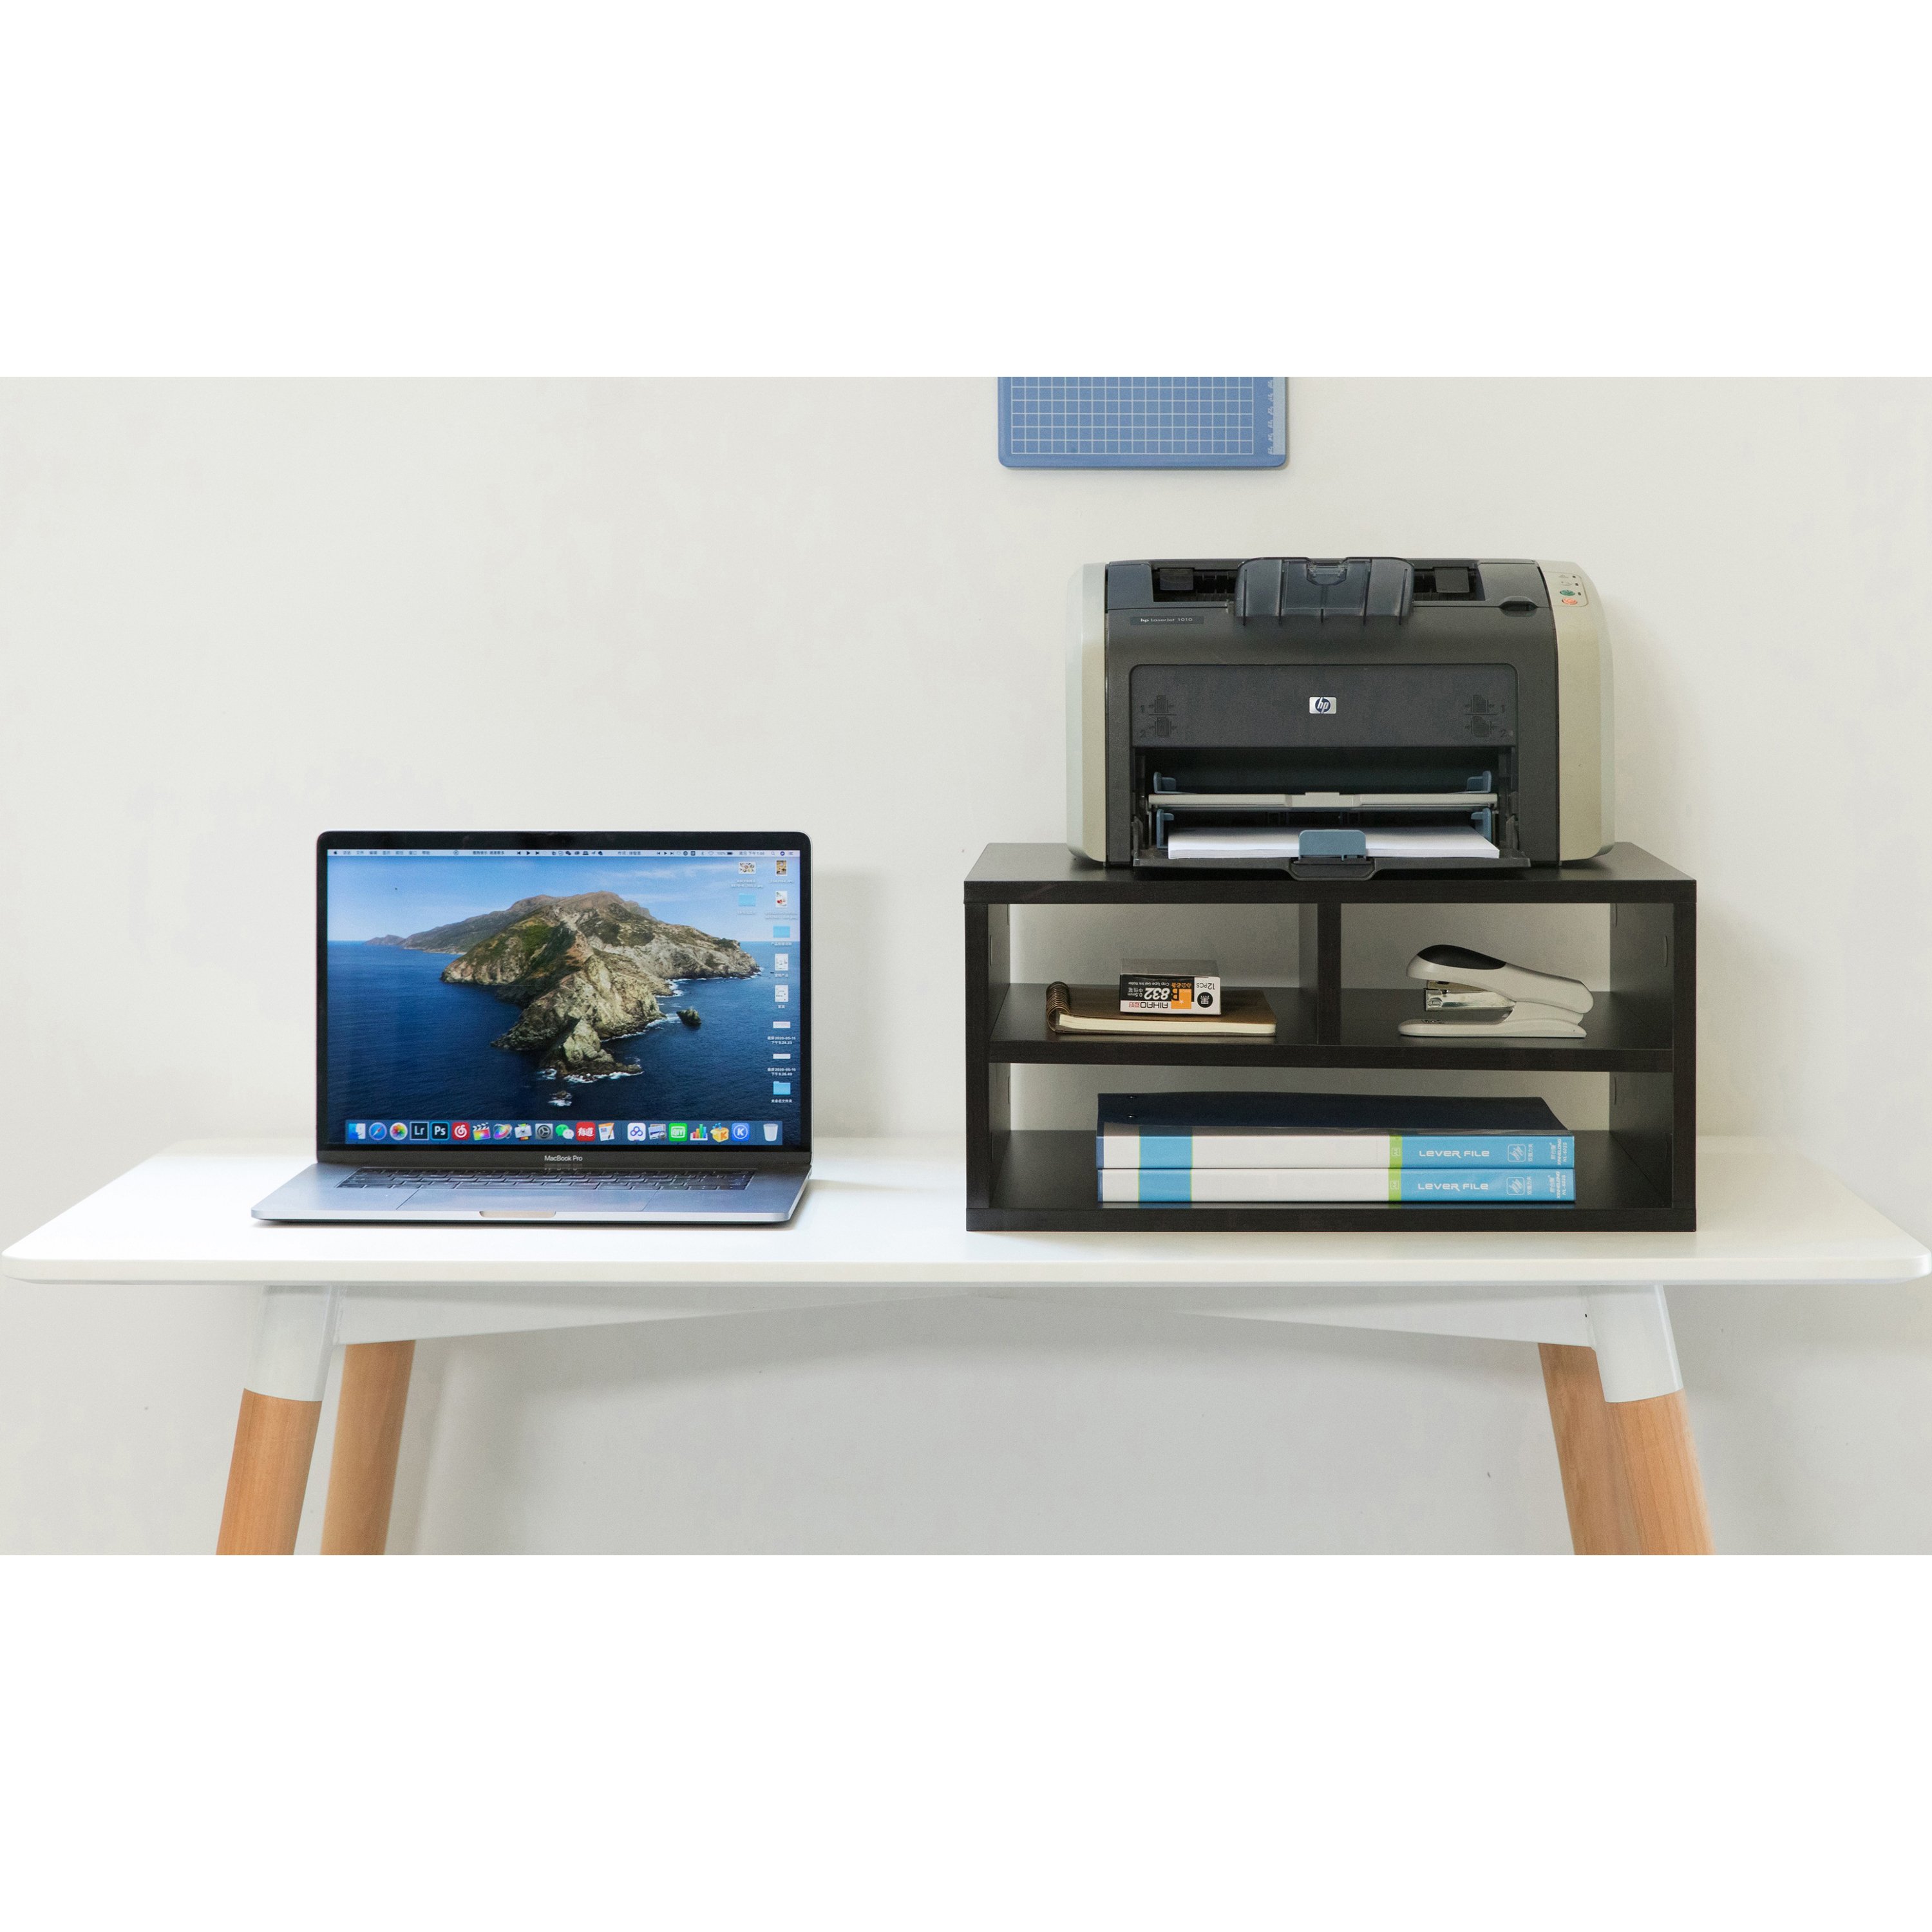 Printer Stand Shelf Wood Office Desktop Compartment Organizer - Black